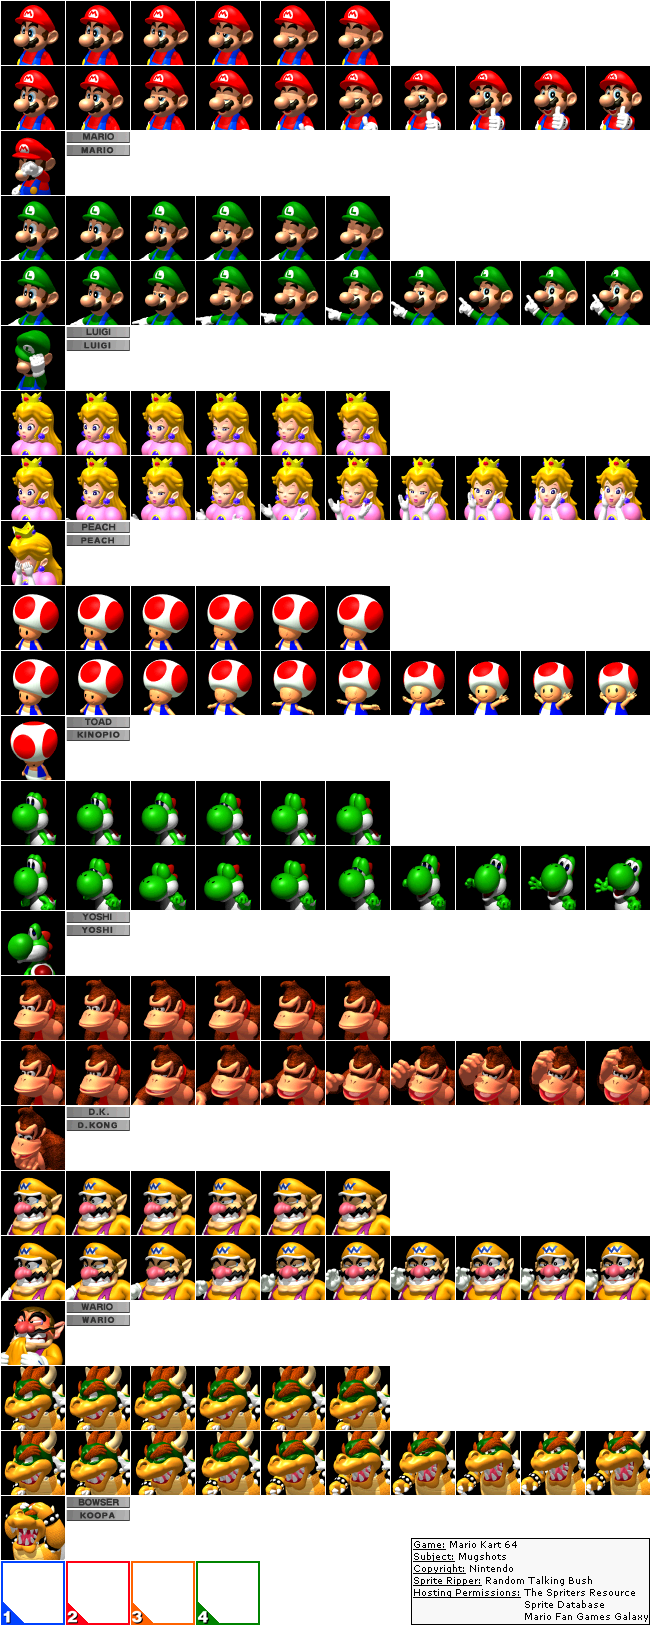 Filmstrips of Mario Kart 64 character animations